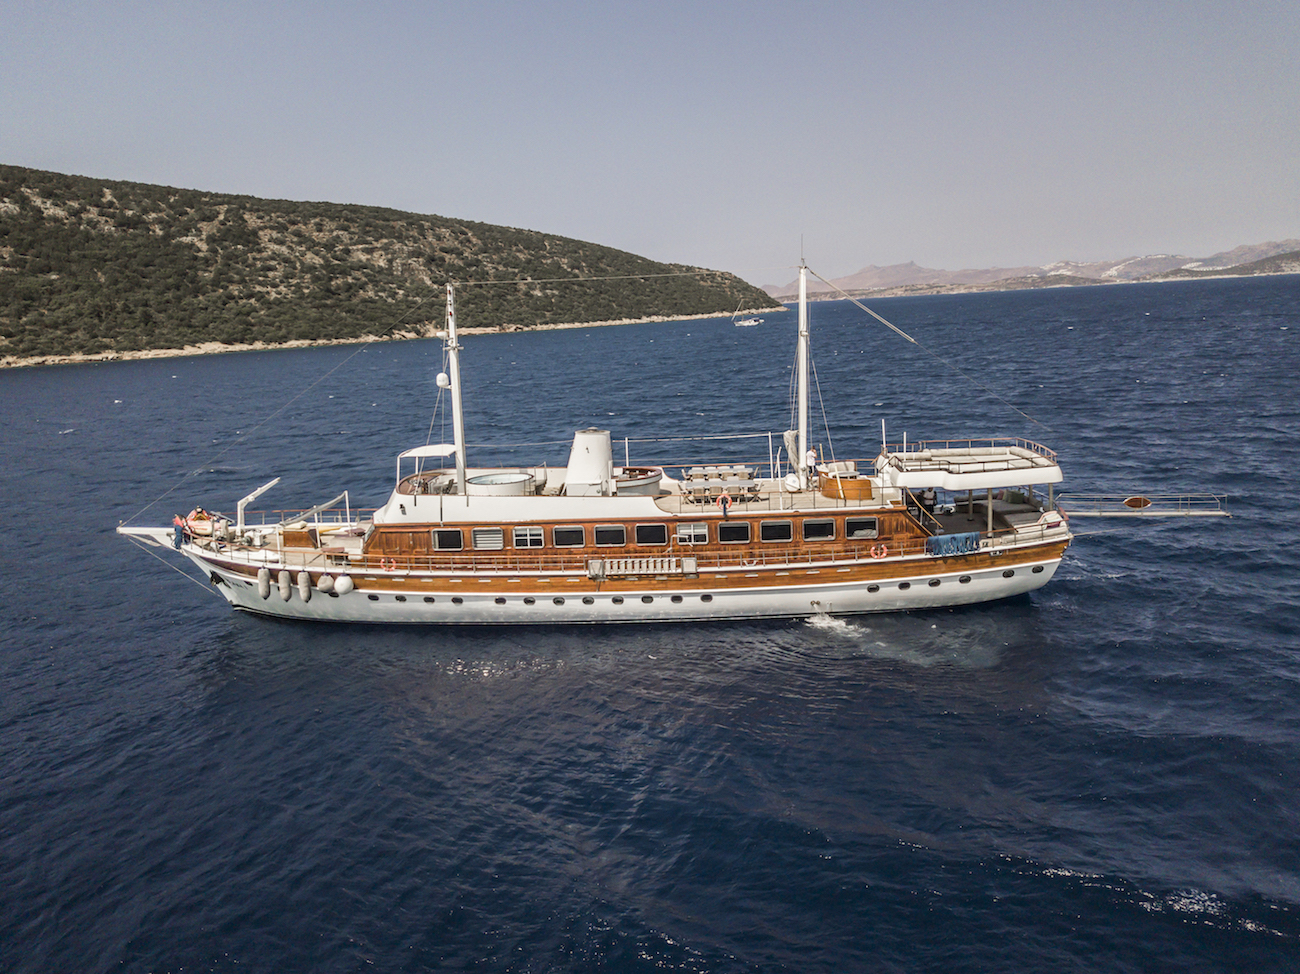 ELARA 1 - Exterior Profile Of The Yacht